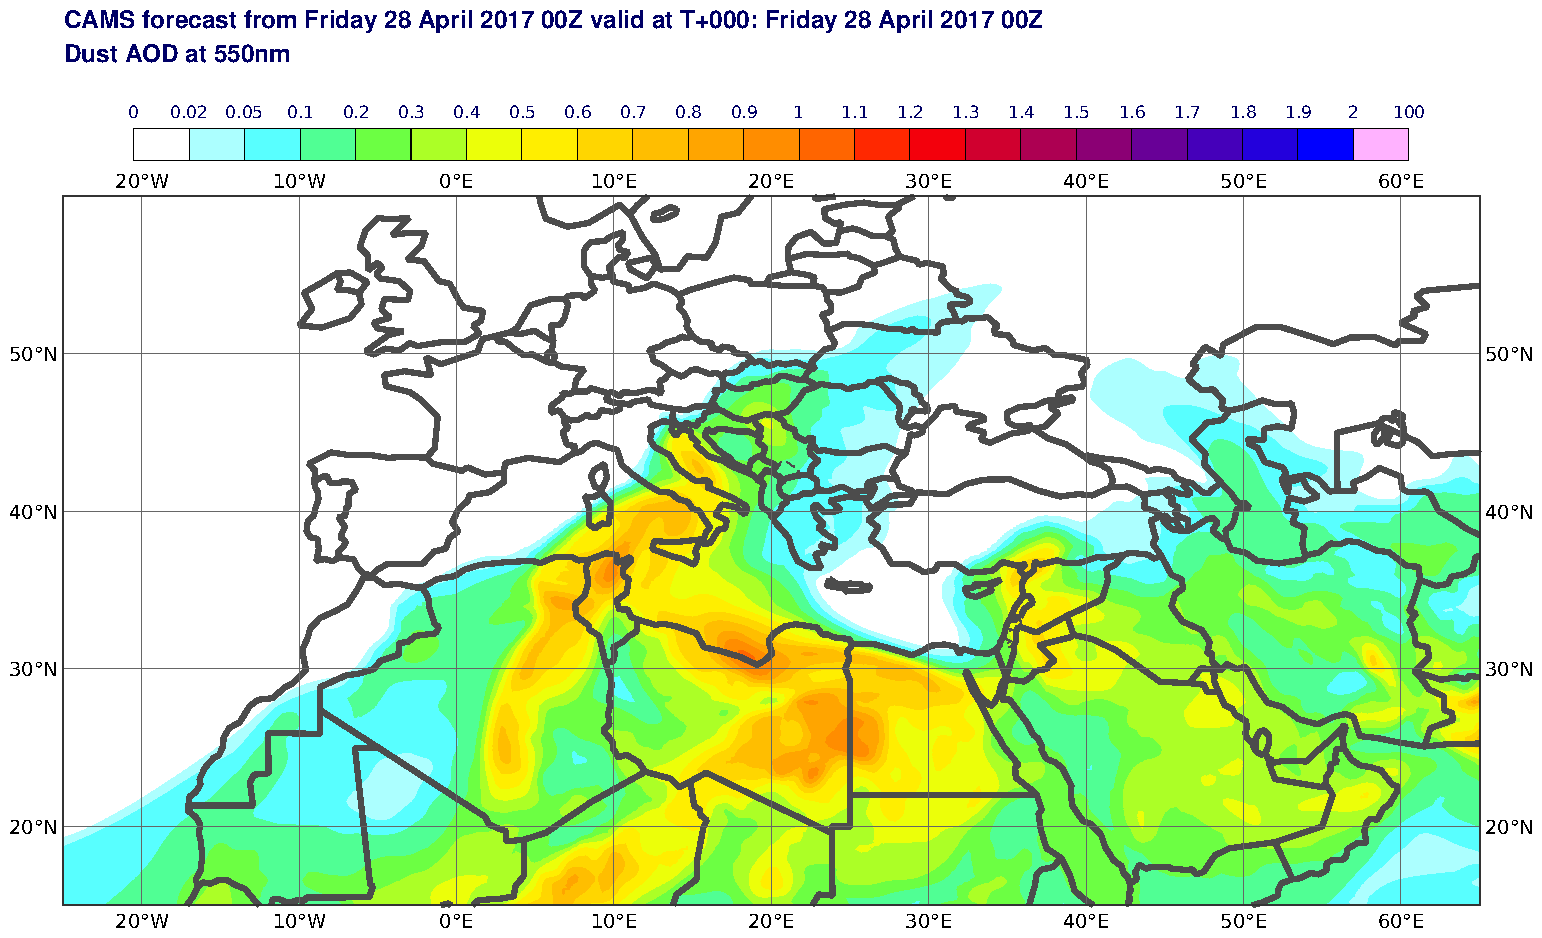 Dust AOD at 550nm valid at T0 - 2017-04-28 00:00